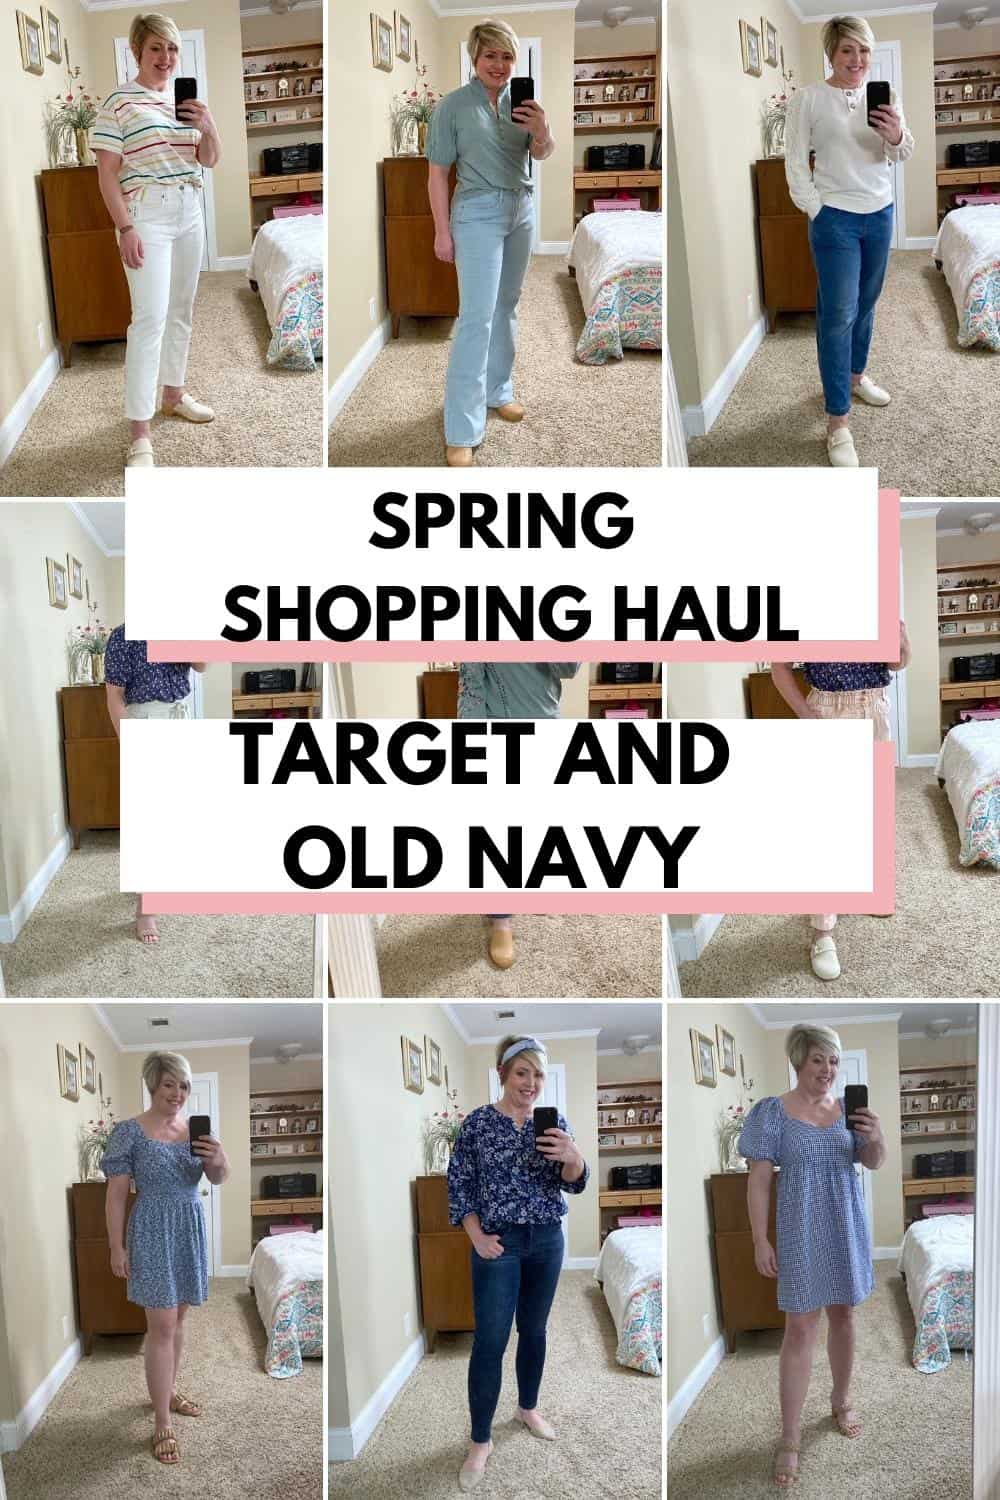 Spring shopping haul